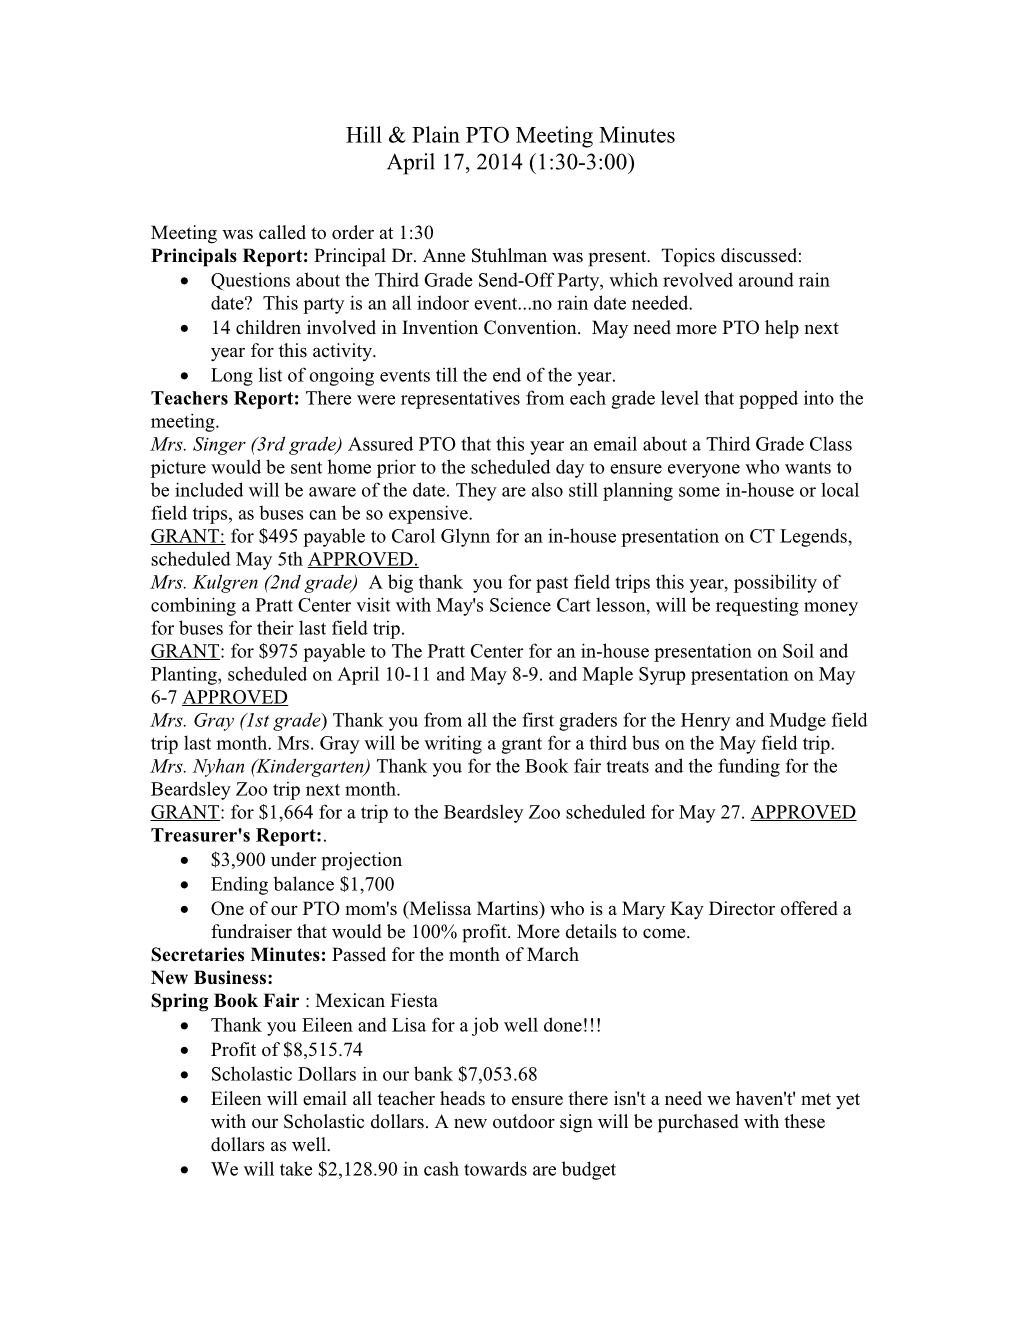 Hill & Plain PTO October Meeting Minutes